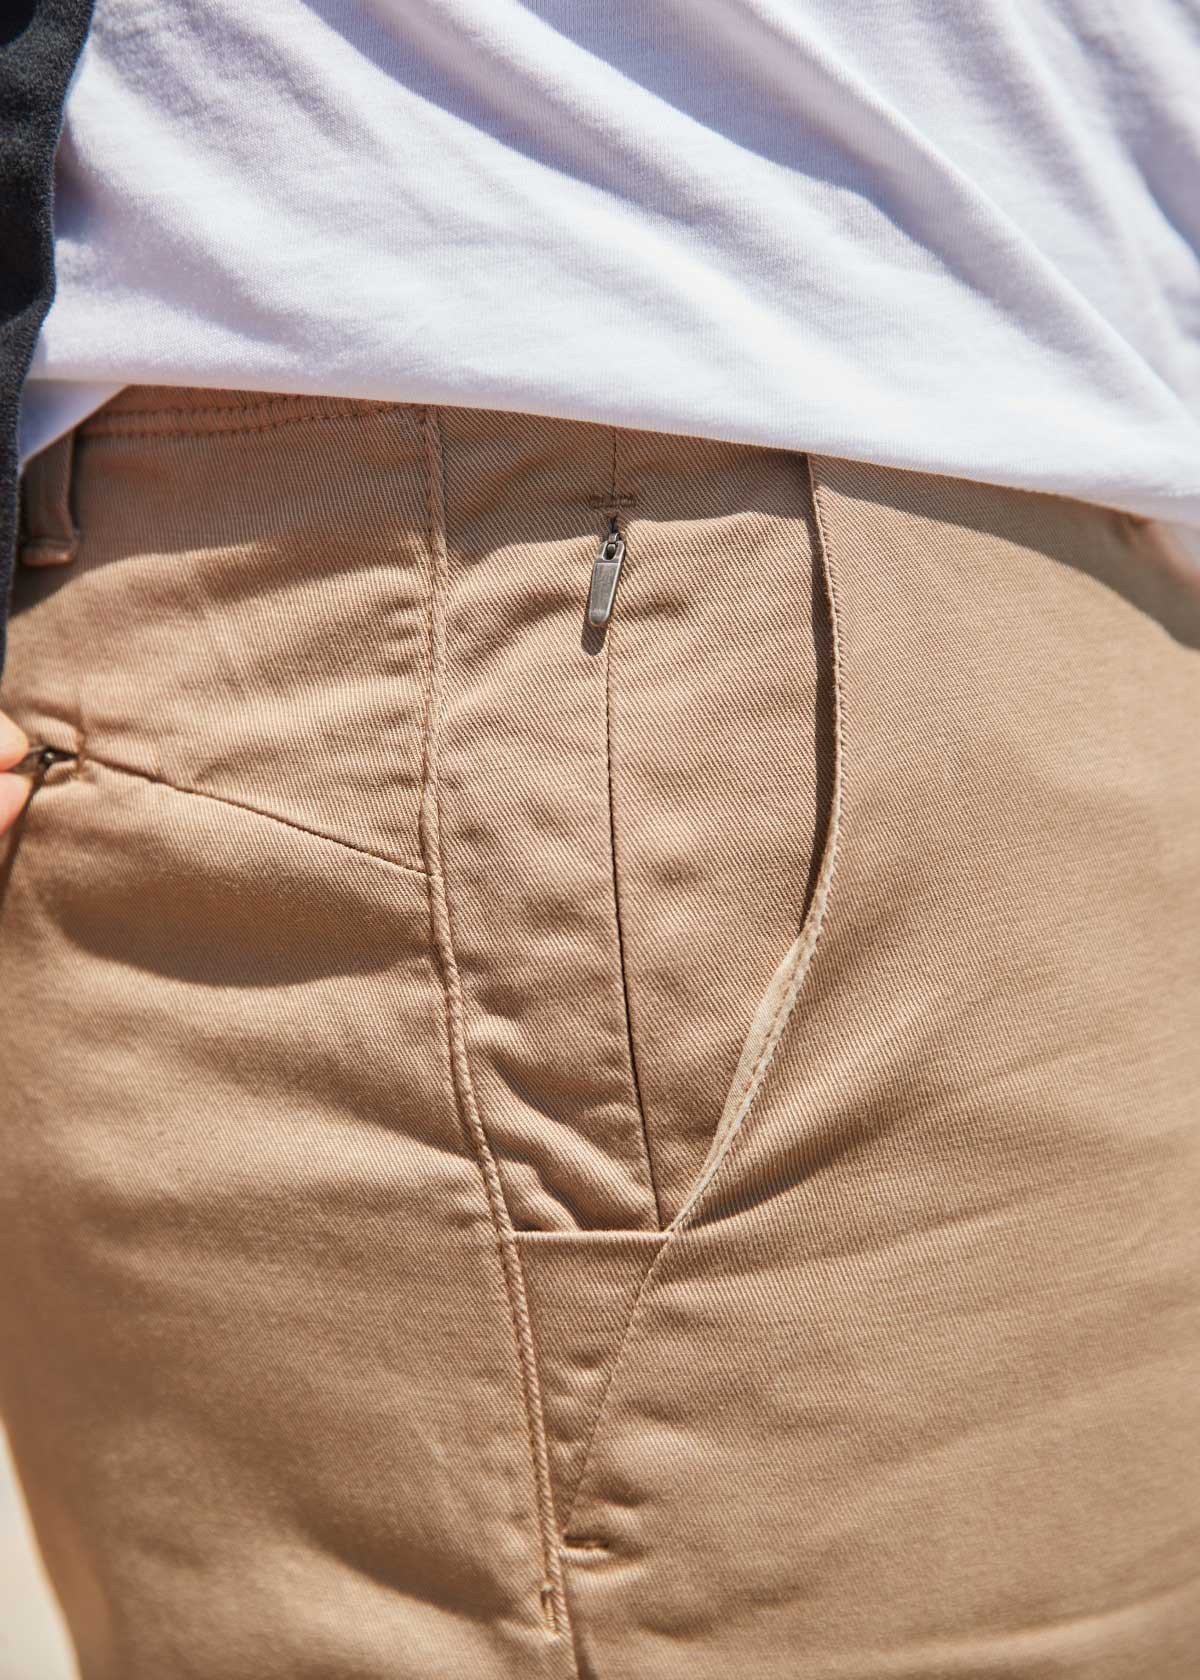 mens stretch khaki chino pant zip front pocket detail